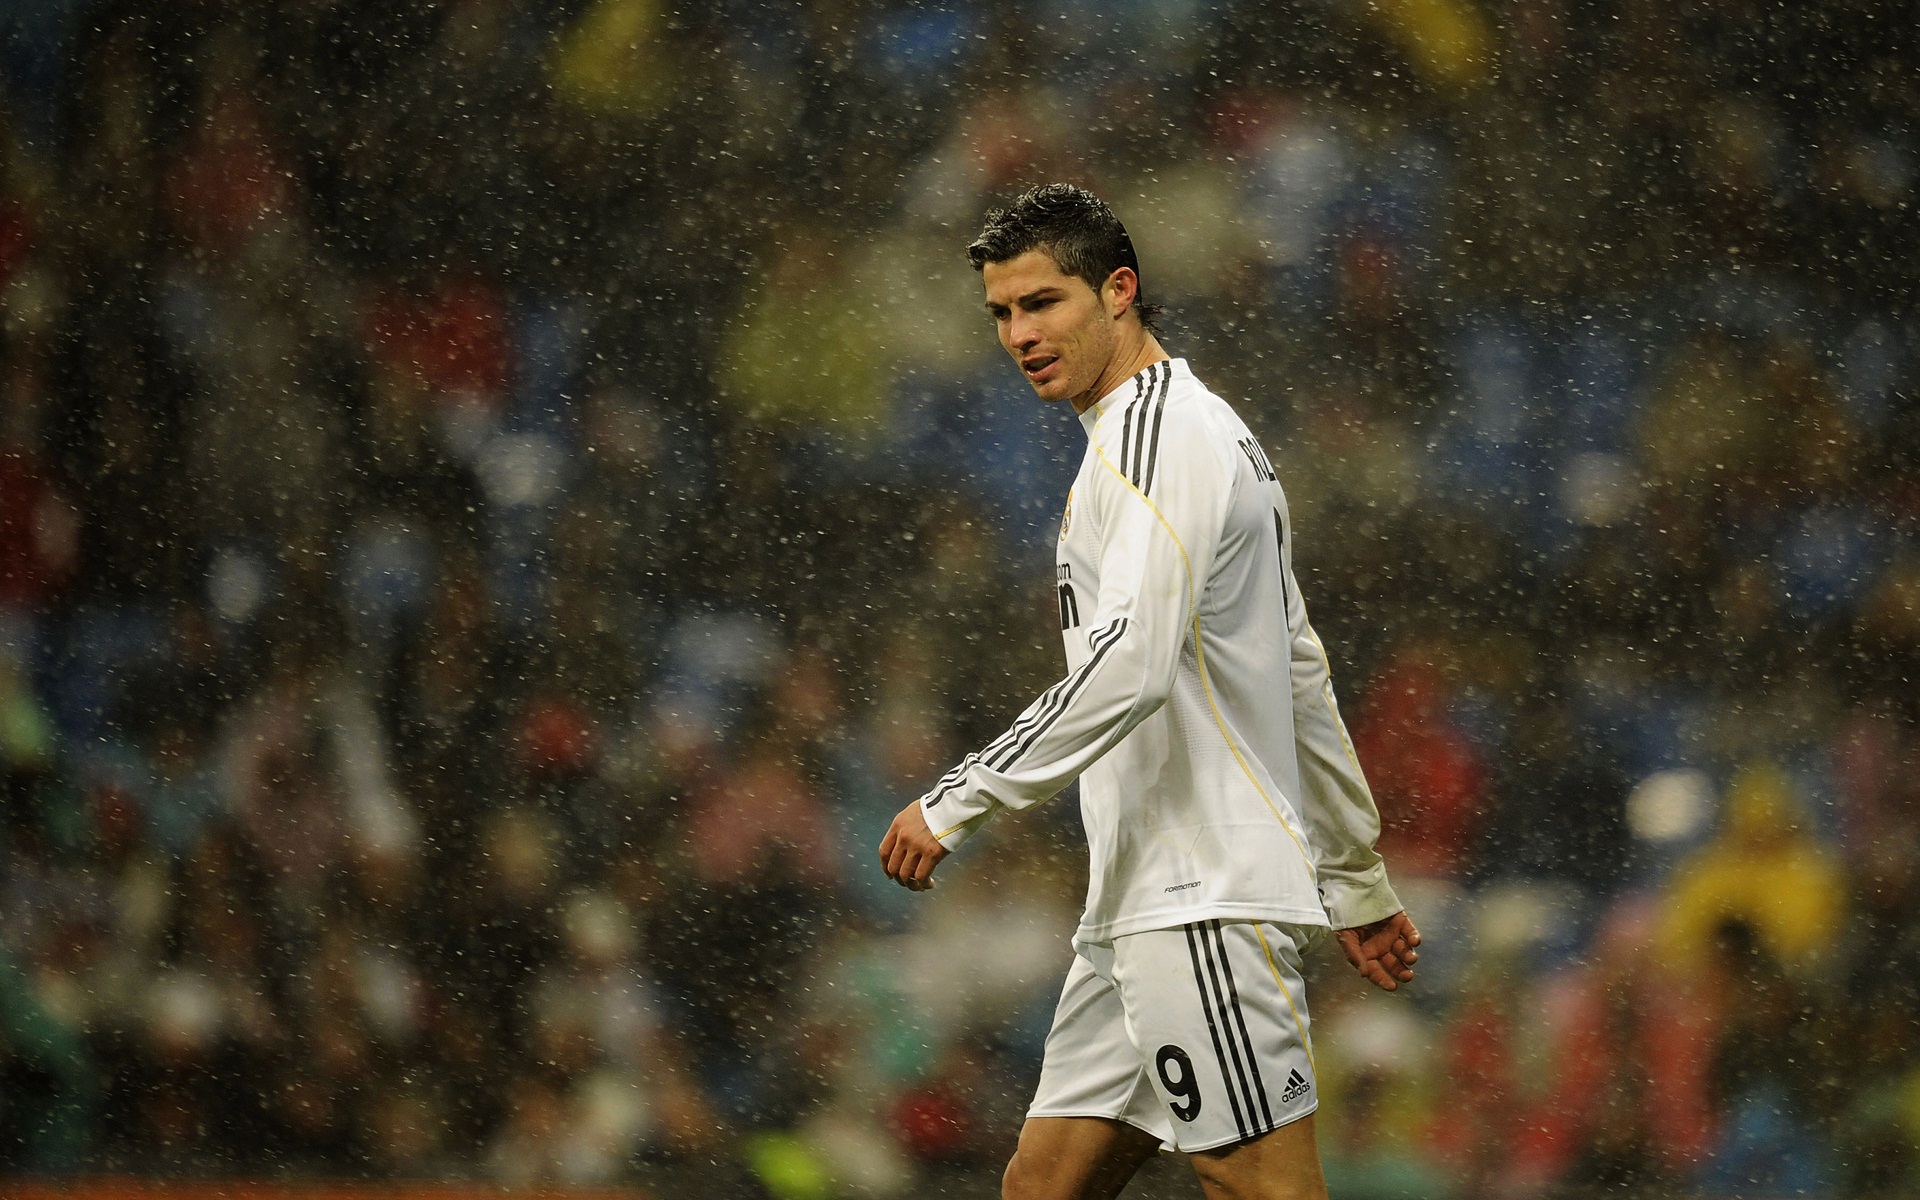 Cristiano Ronaldo Real Madrid Wallpaper HD